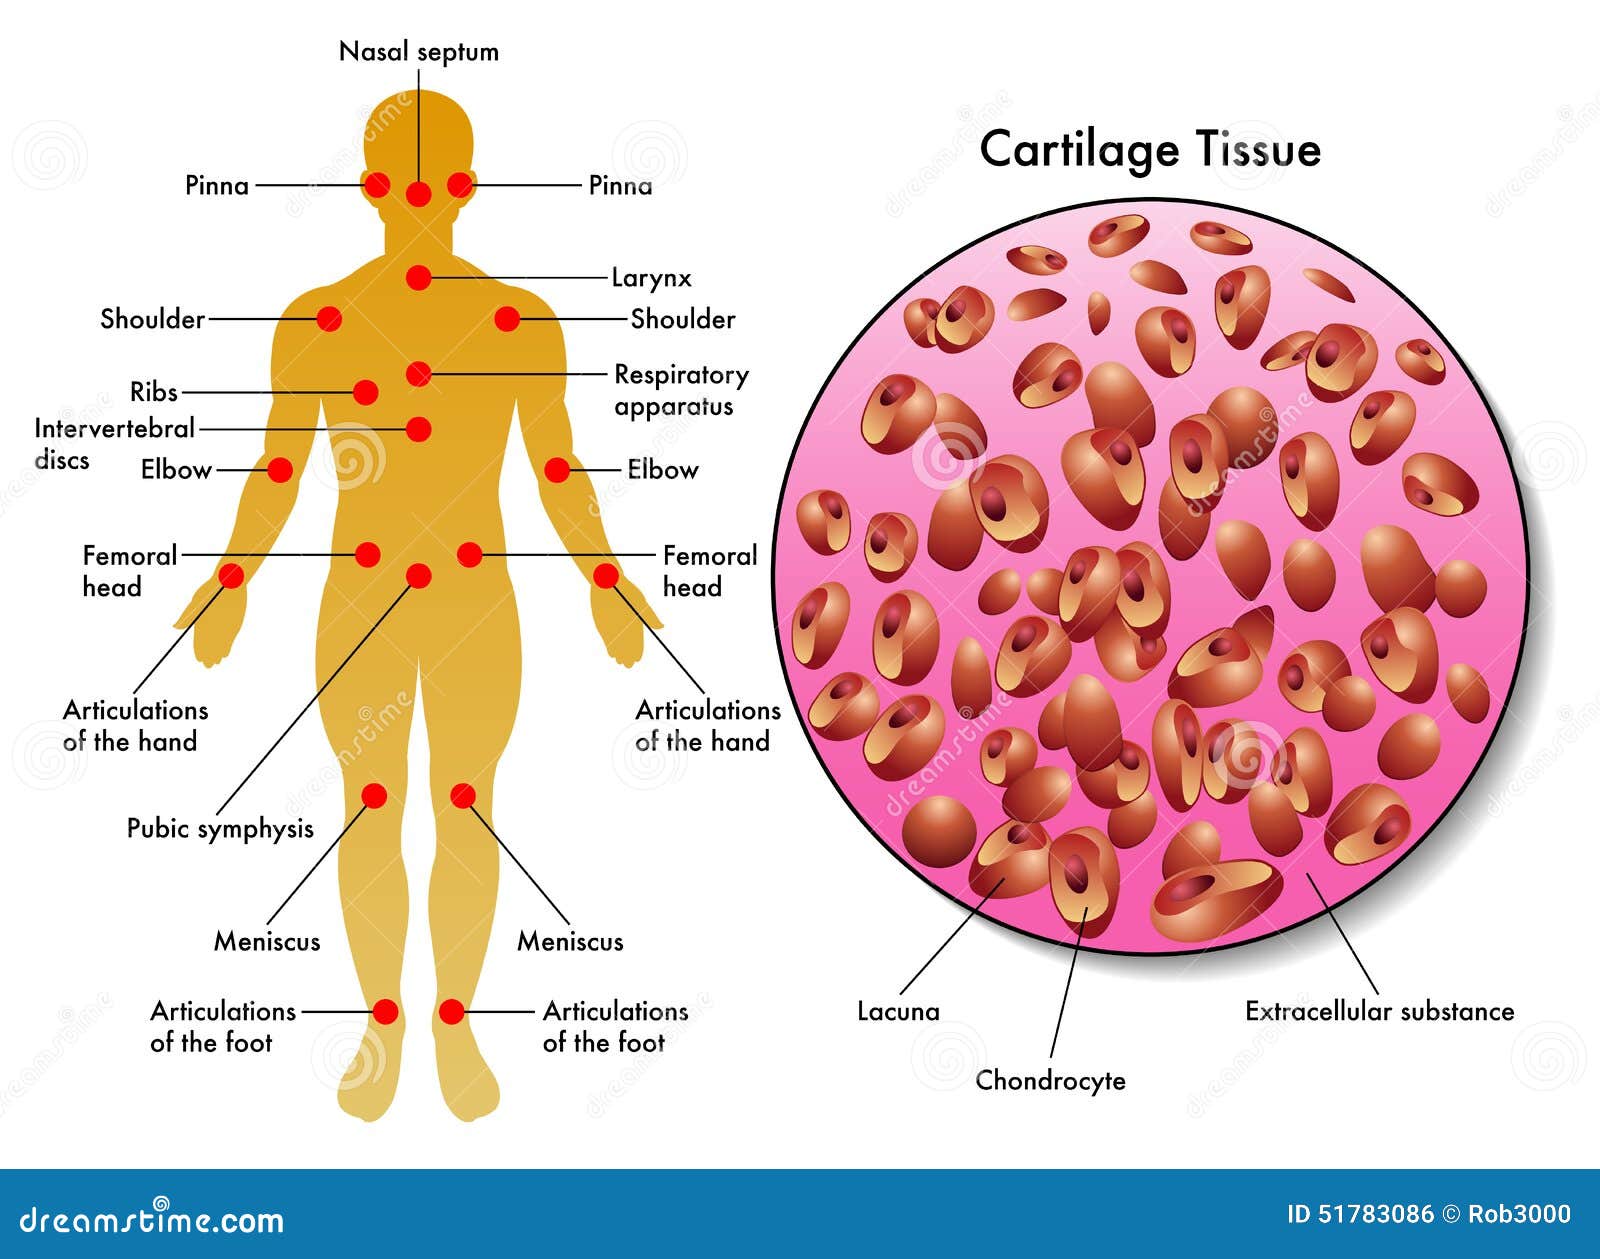 cartilage tissue